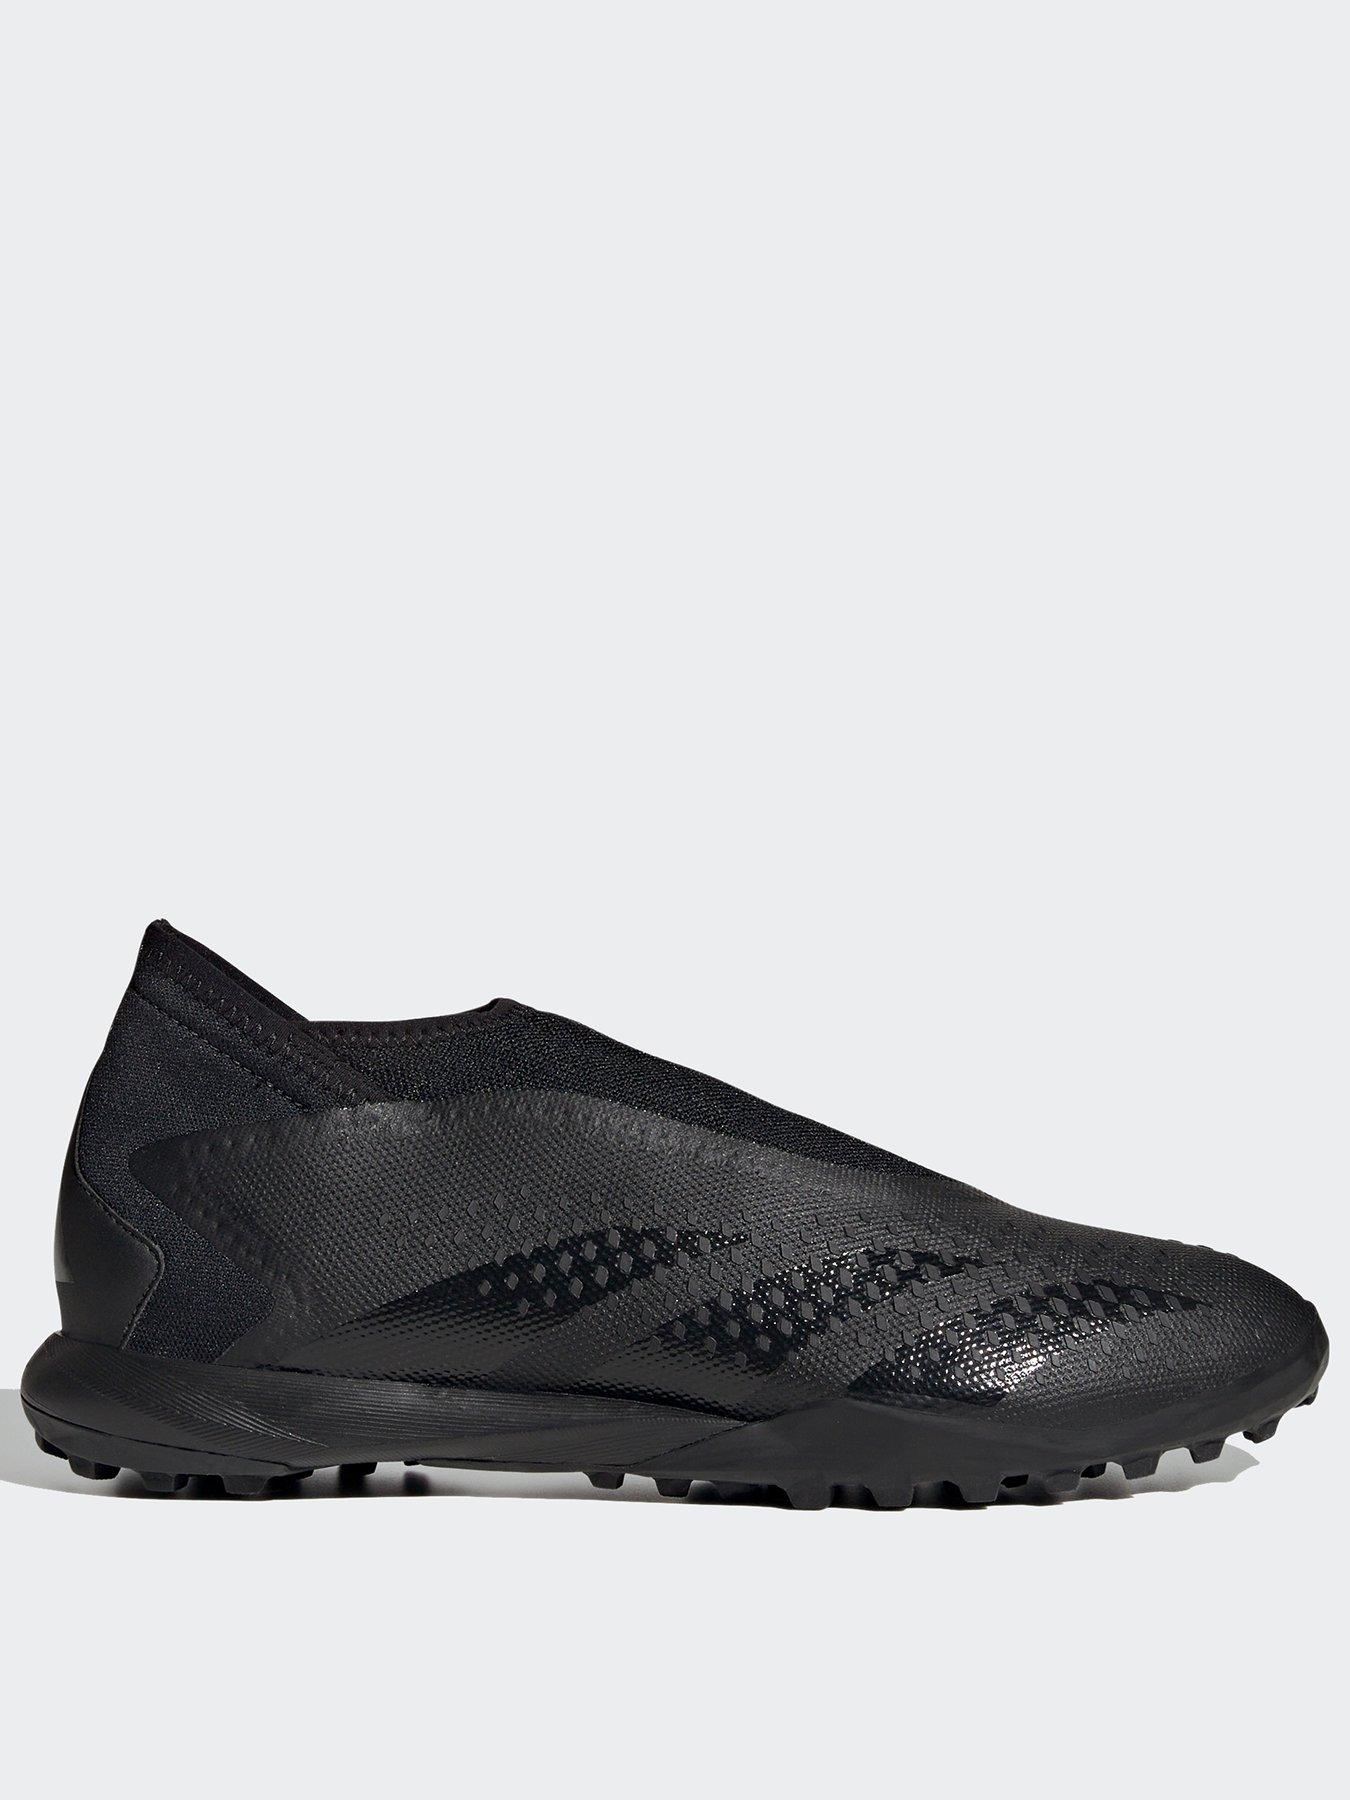 adidas Mens Predator Laceless 20.3 Astro Turf Football Boot - Black, Black, Size 8, Men